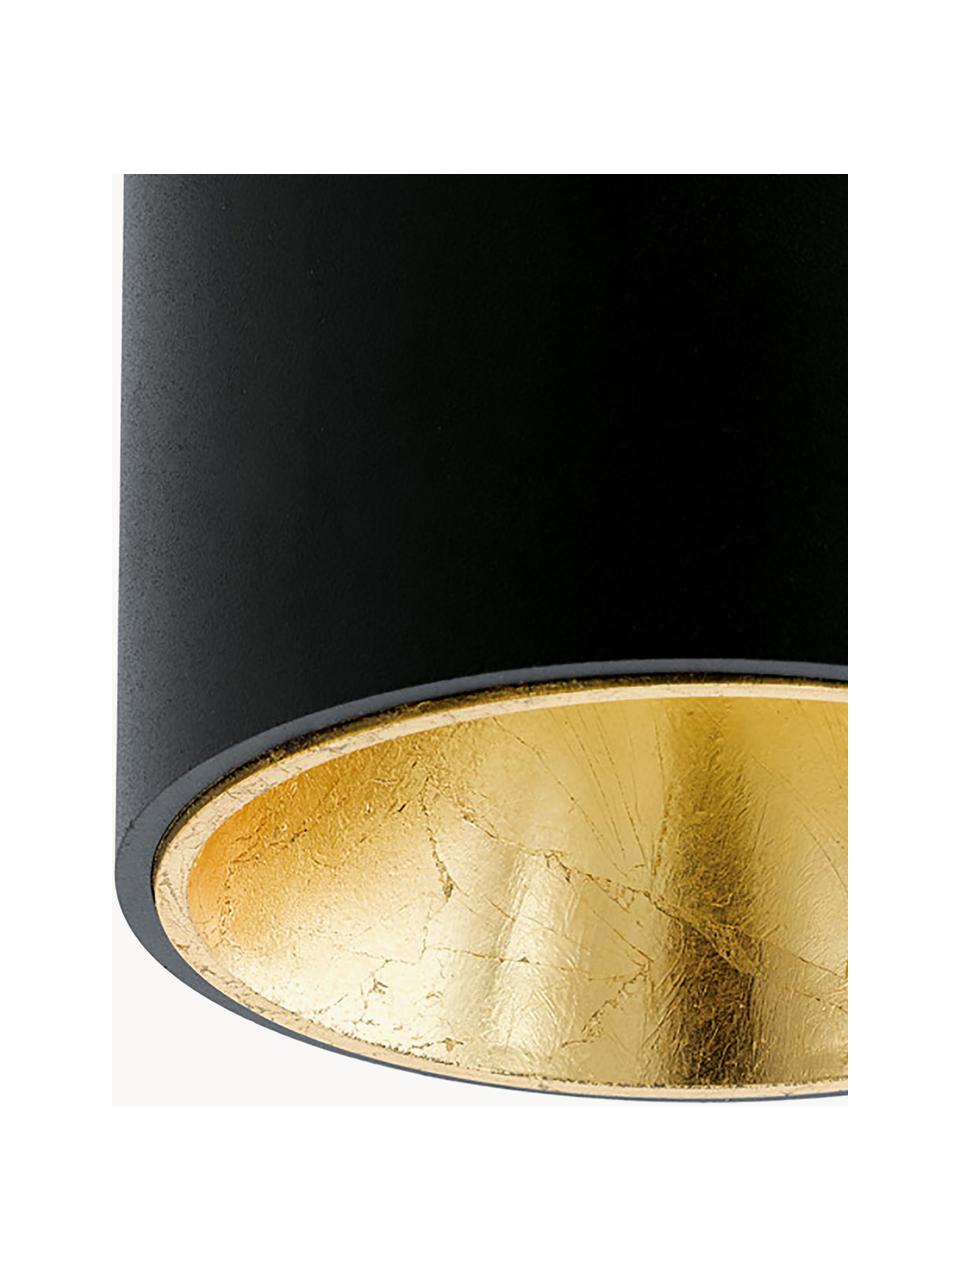 LED plafondspot Marty, Zwart, goudkleurig, Ø 10 x H 12 cm